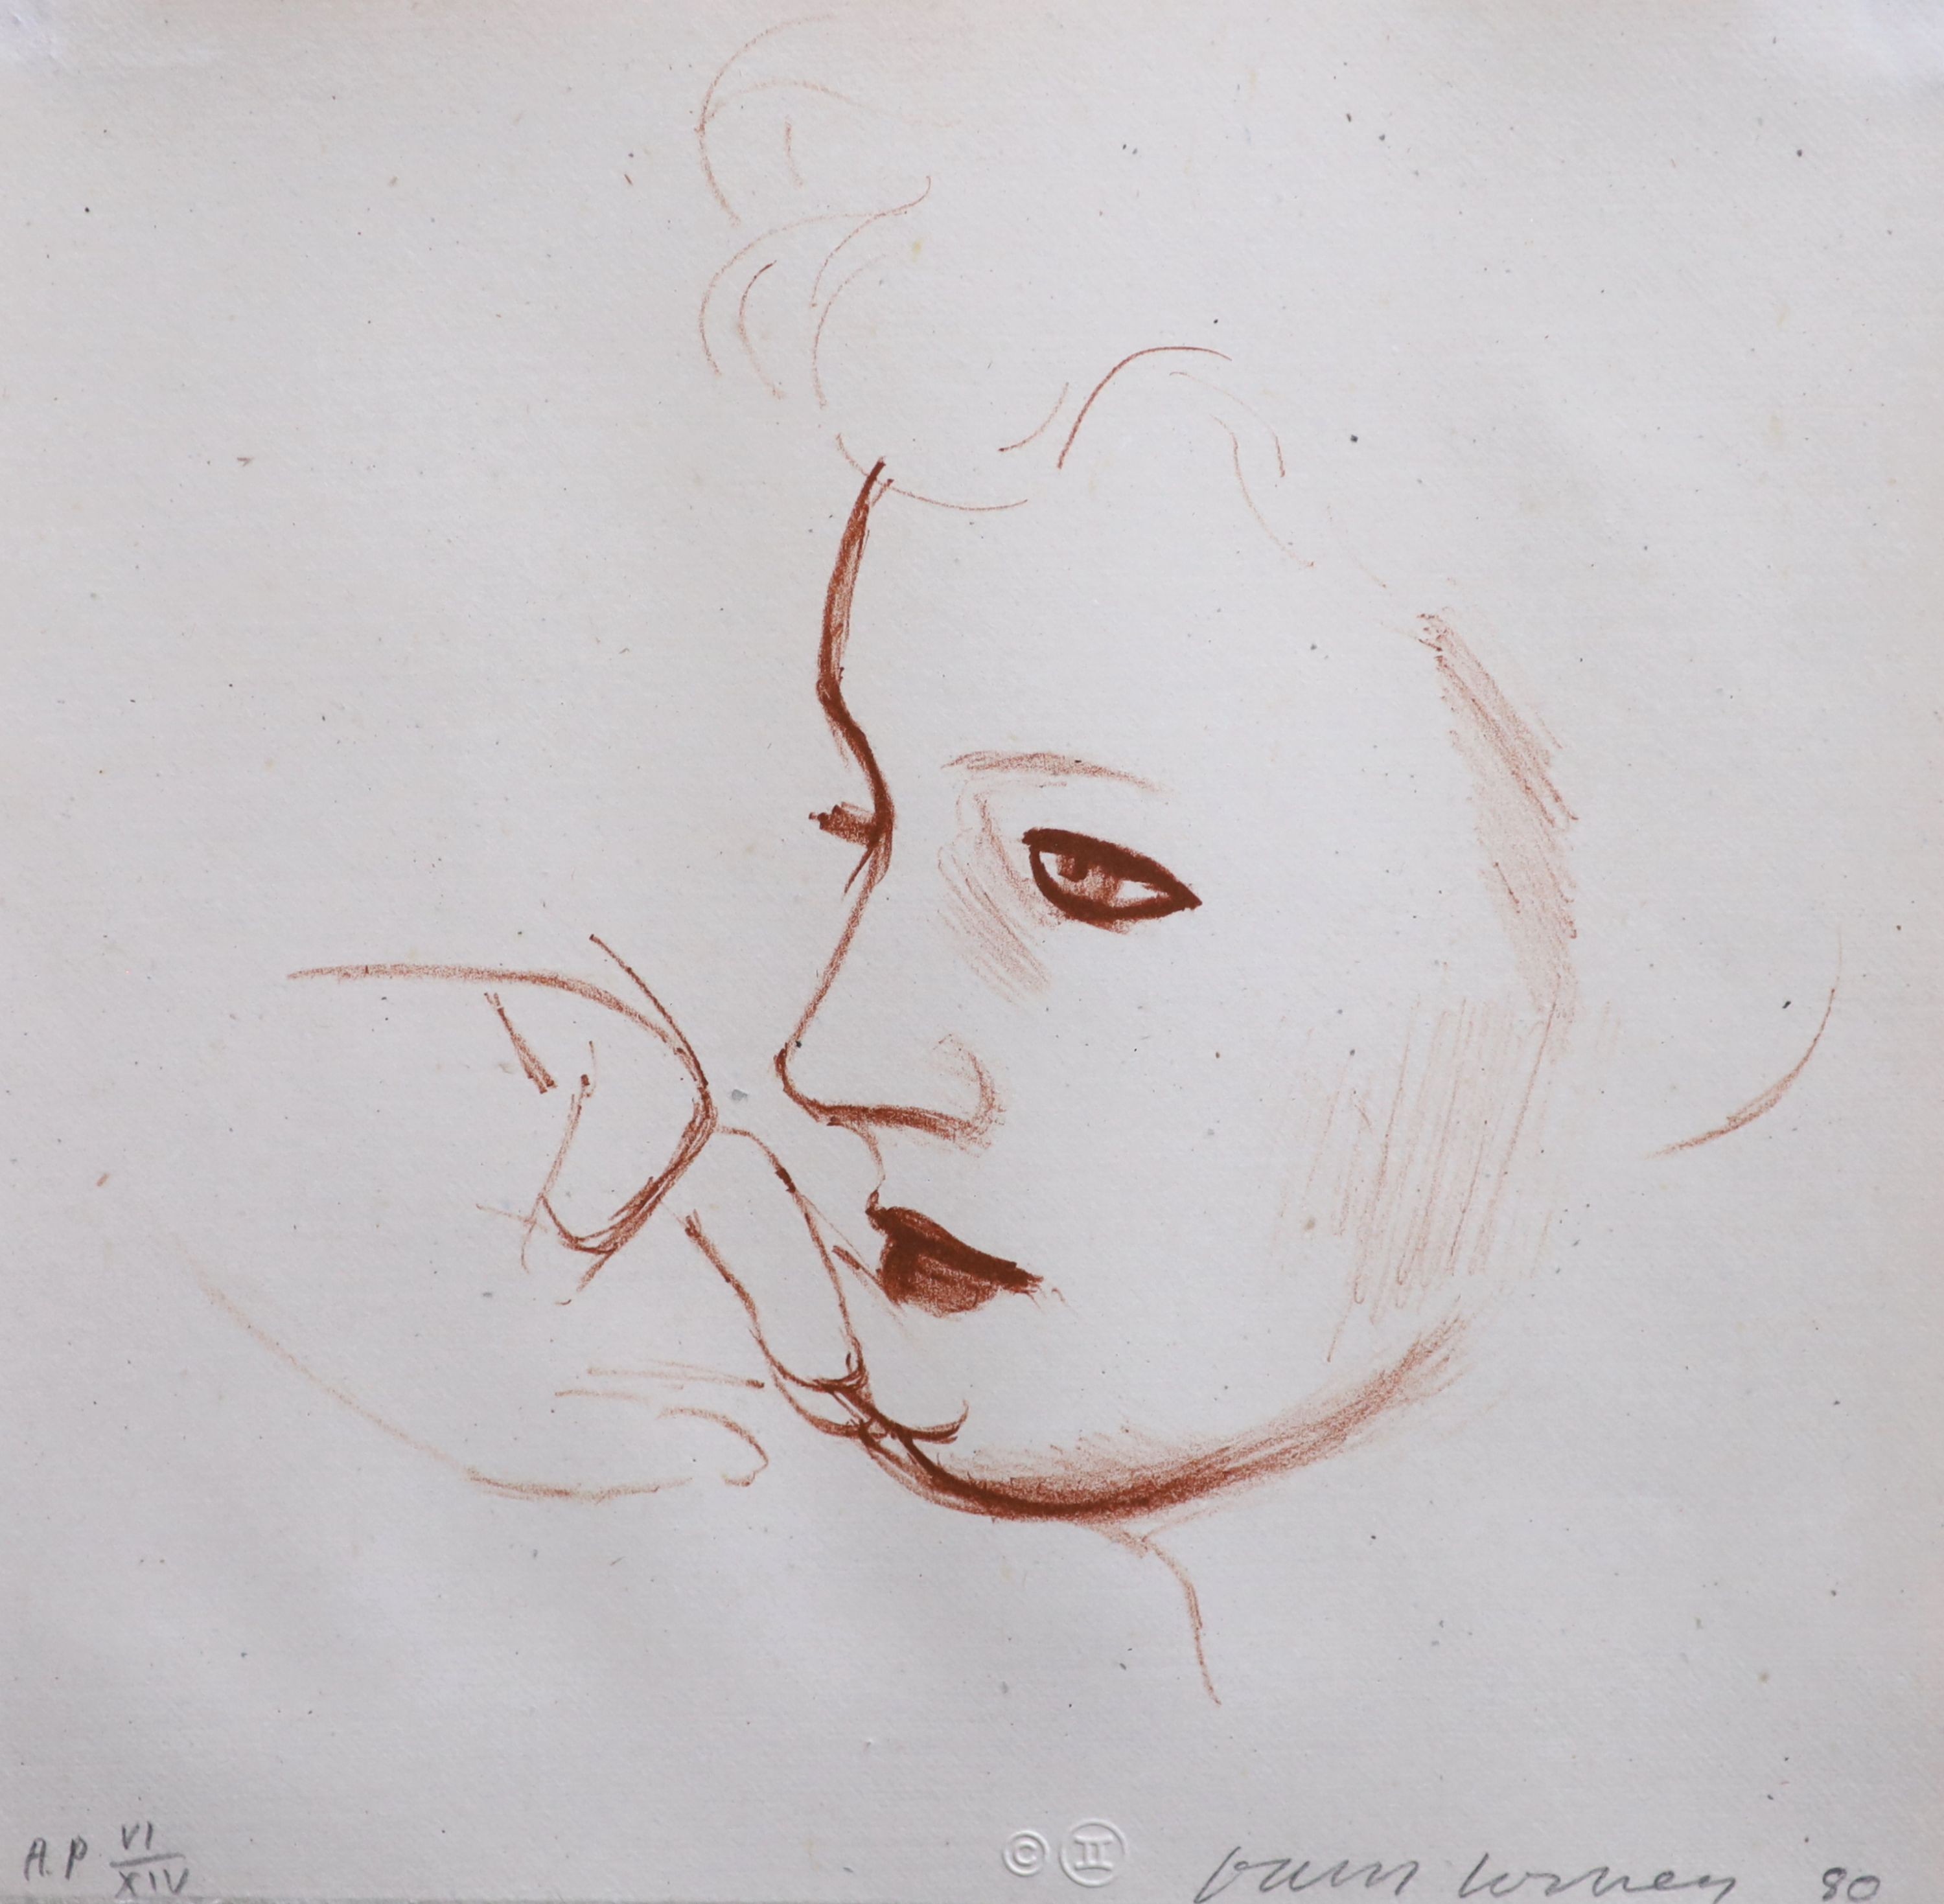 David Hockney (1937-), Celia Looks, 1980, Lithograph, 27 x 27cm.